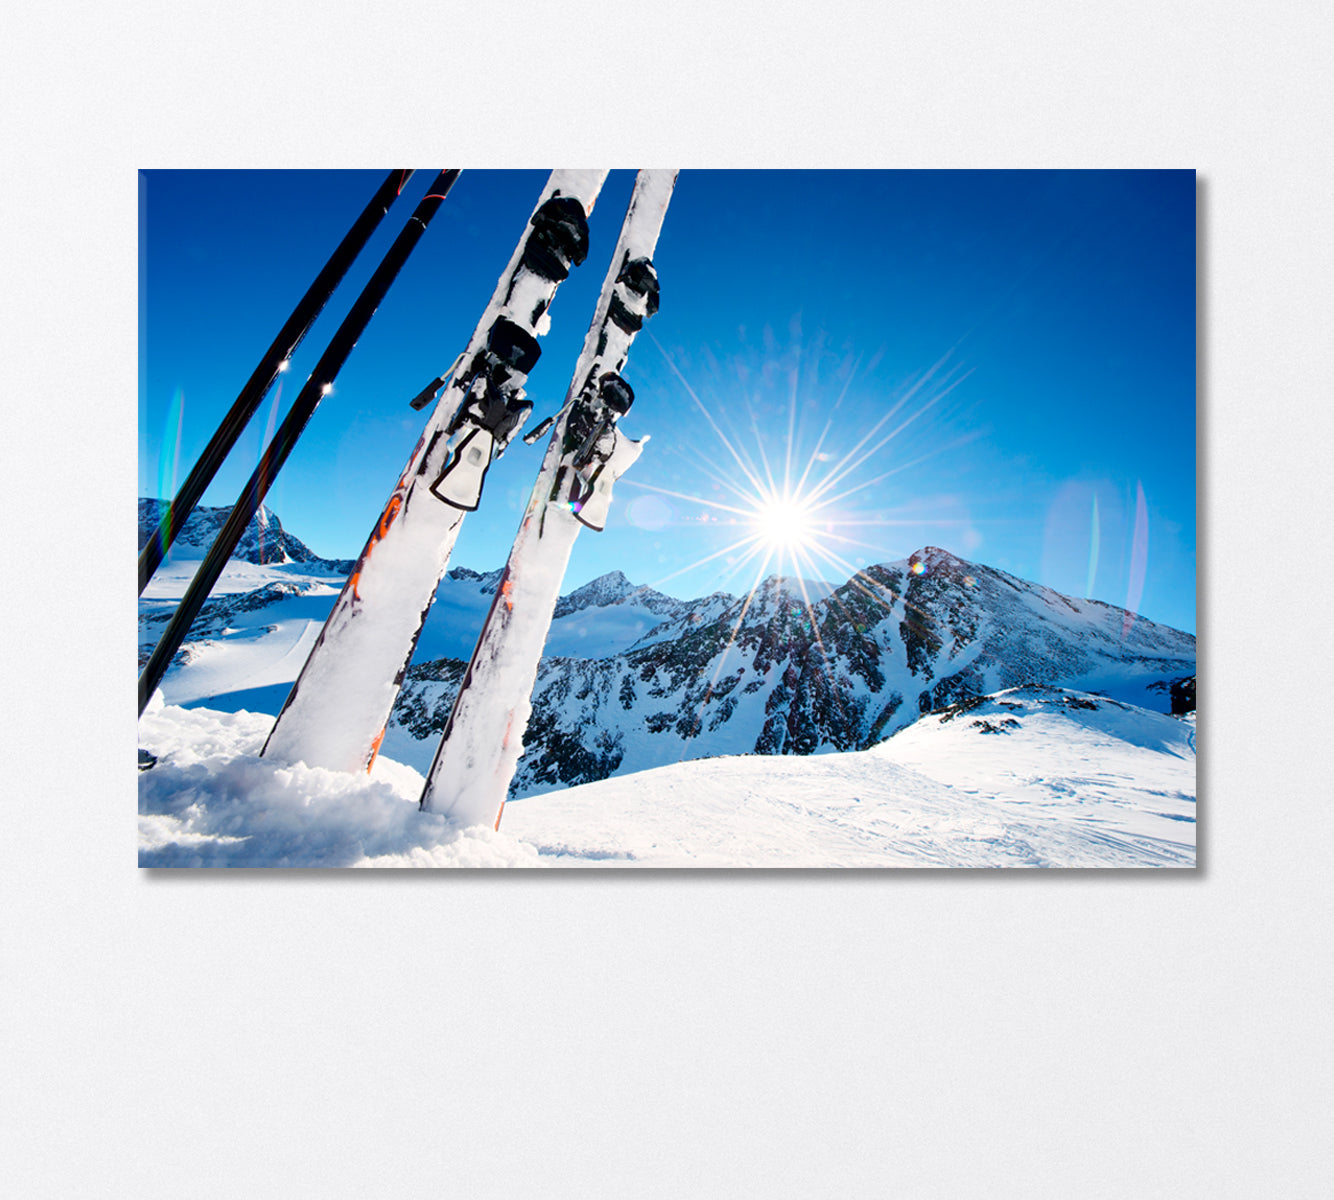 Ski Equipment in Mountains in Snow Canvas Print-Canvas Print-CetArt-1 Panel-24x16 inches-CetArt